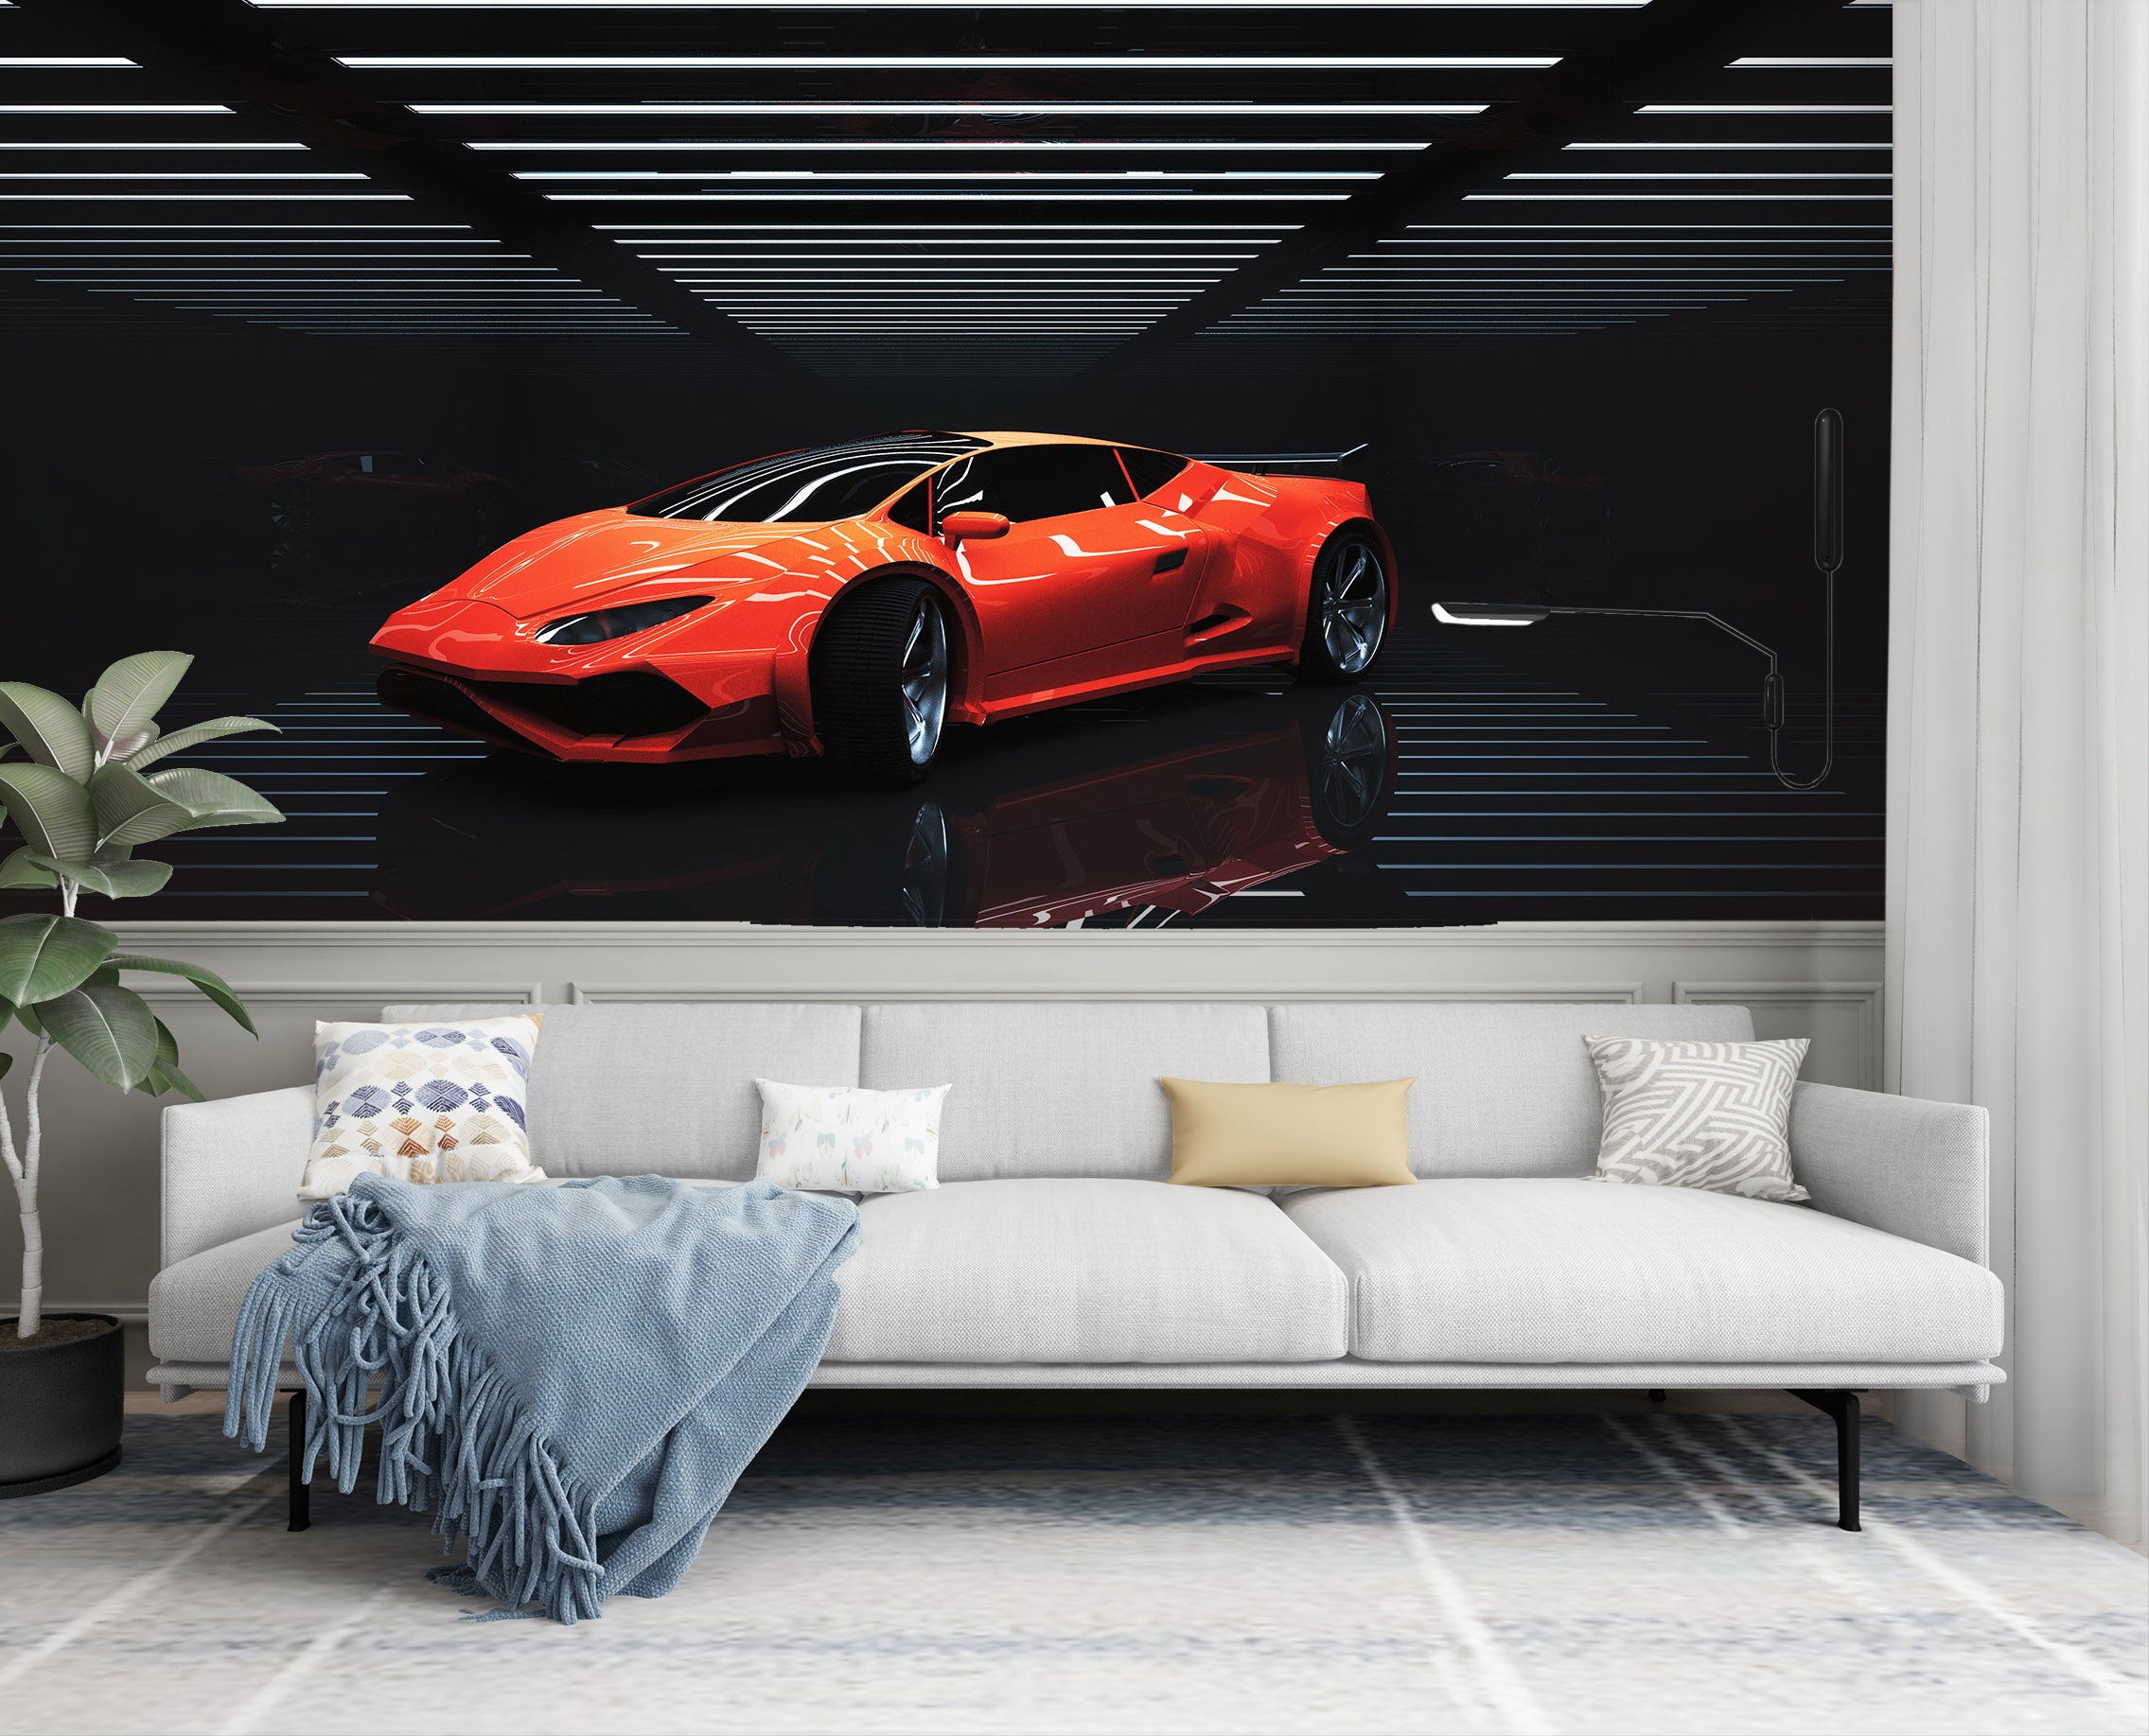 3D Luxury Car 362 Vehicle Wall Murals